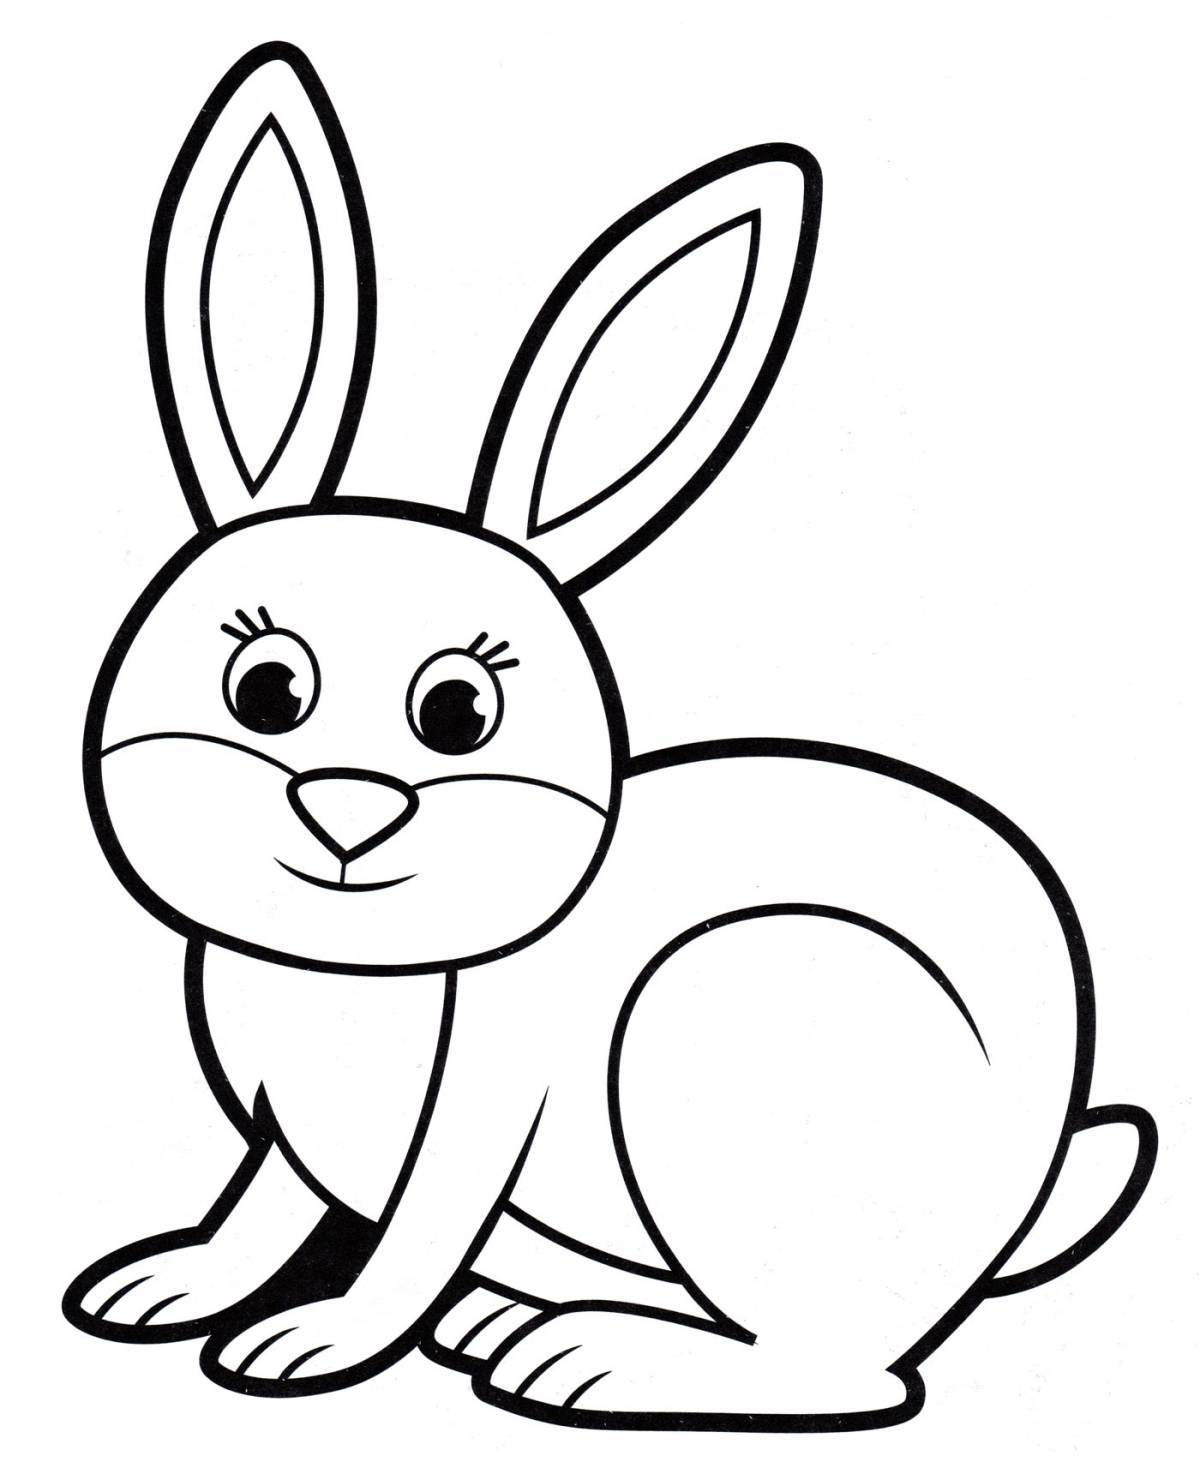 Fun coloring hare picture